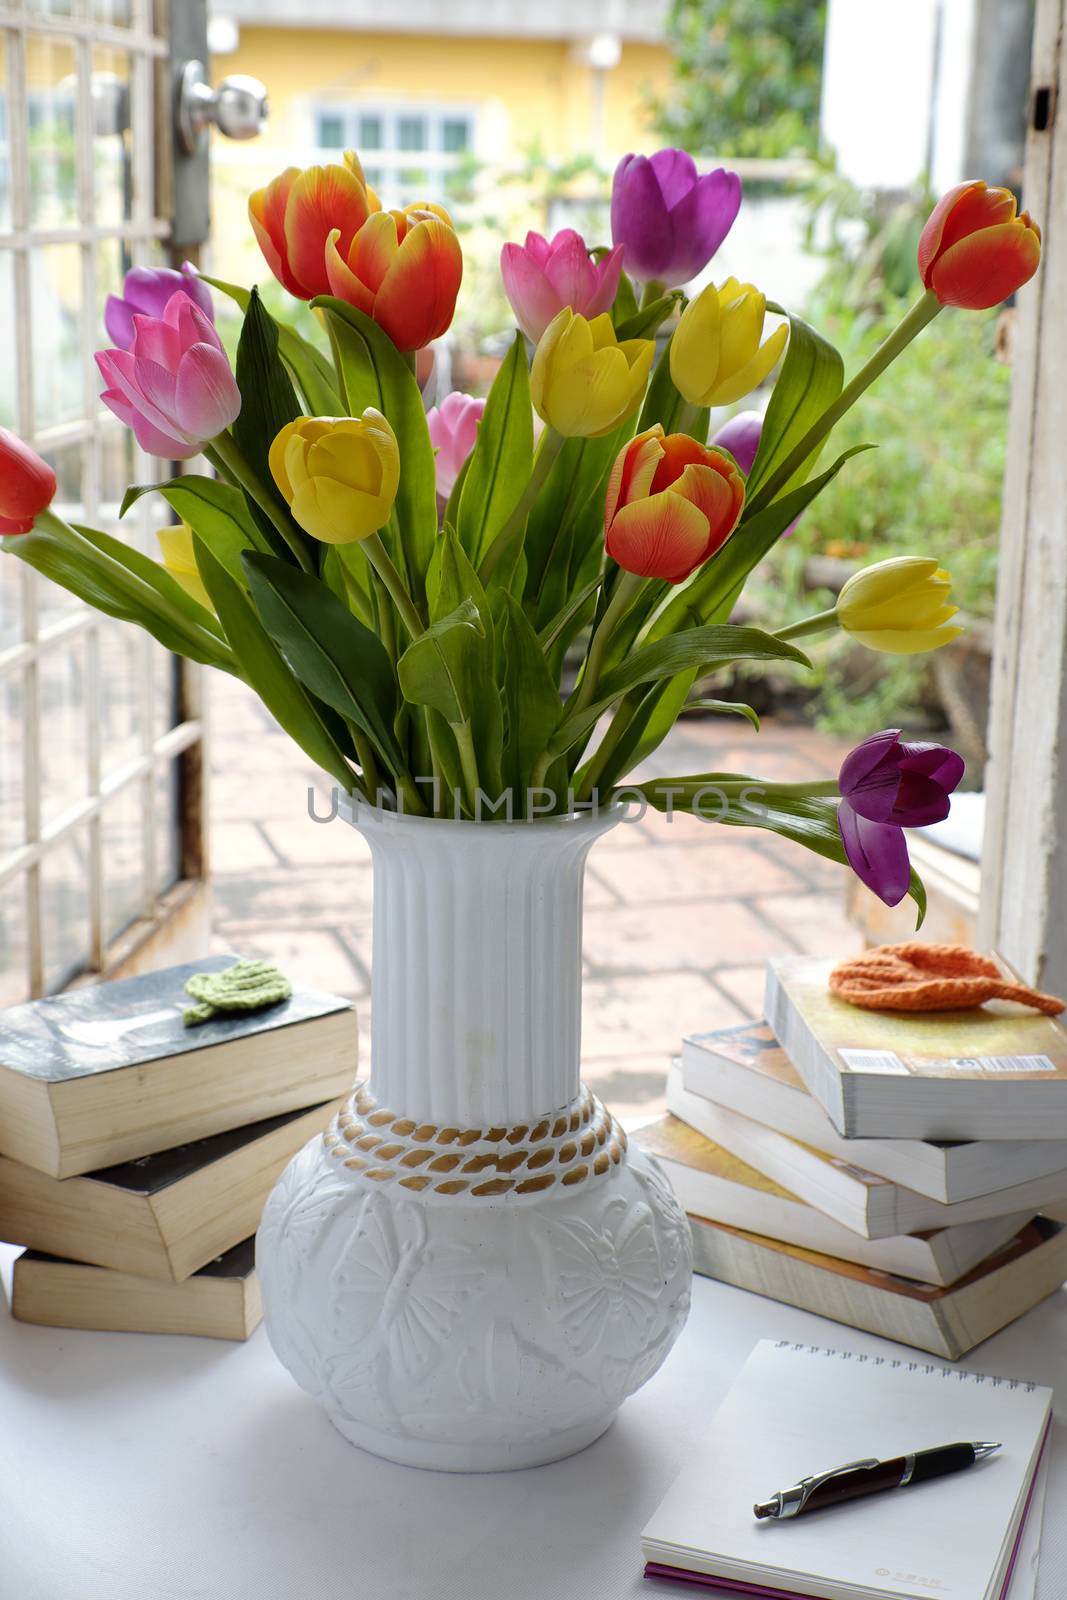 Happy teachers day, handmade tulip flower by xuanhuongho